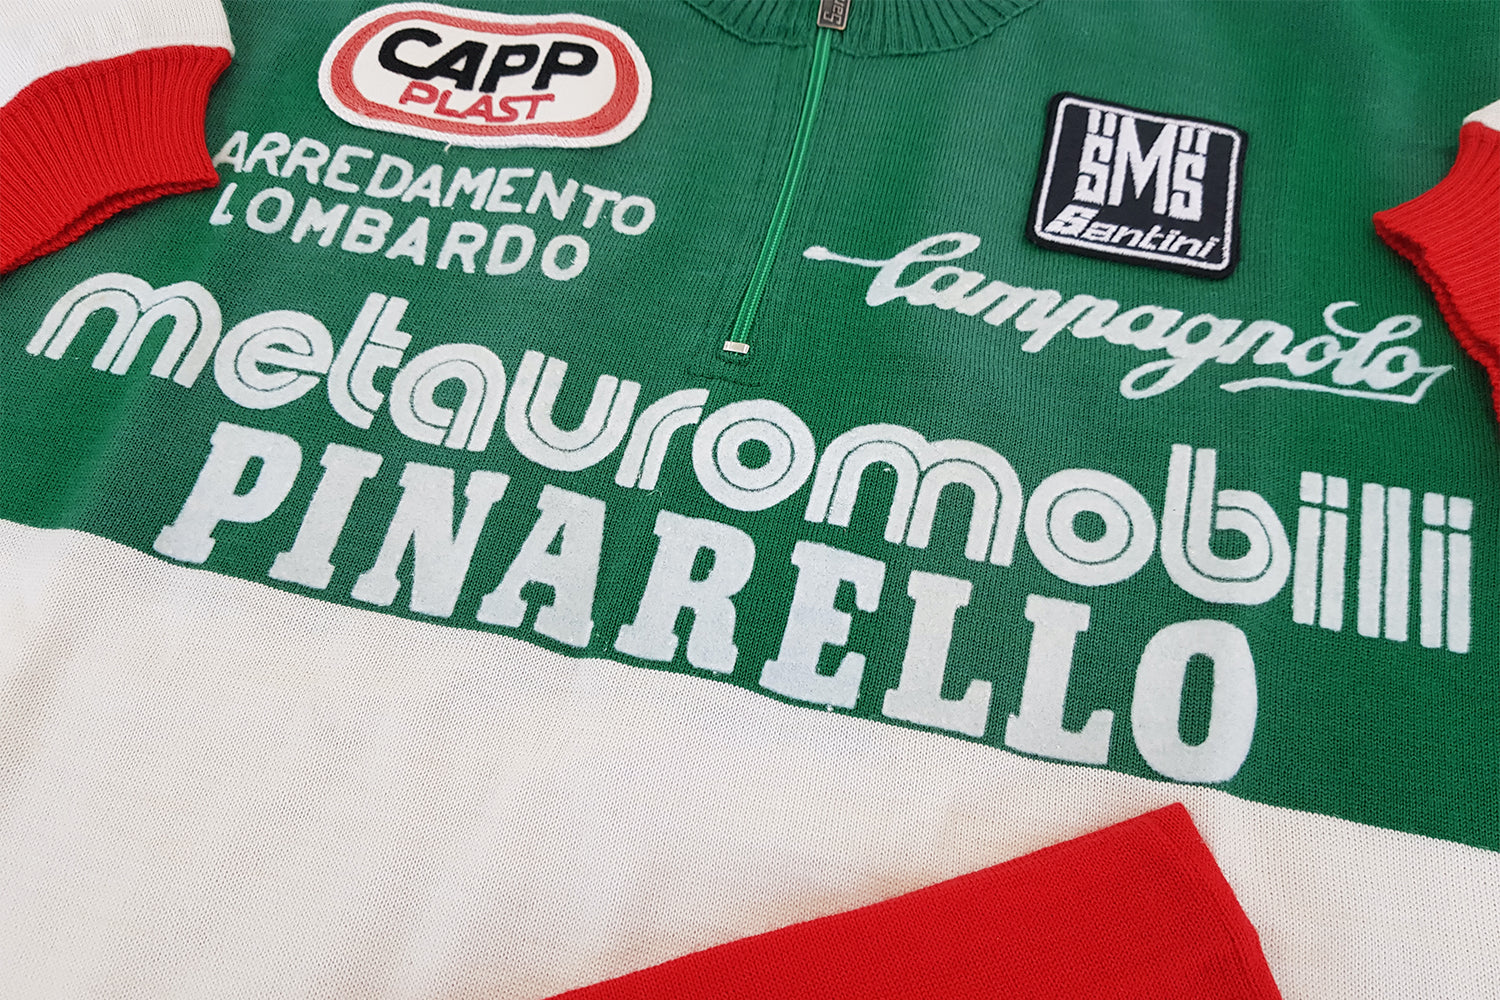 Metauro Mobili/Pinarello/Italian National Champion Wool Jersey by Santini.